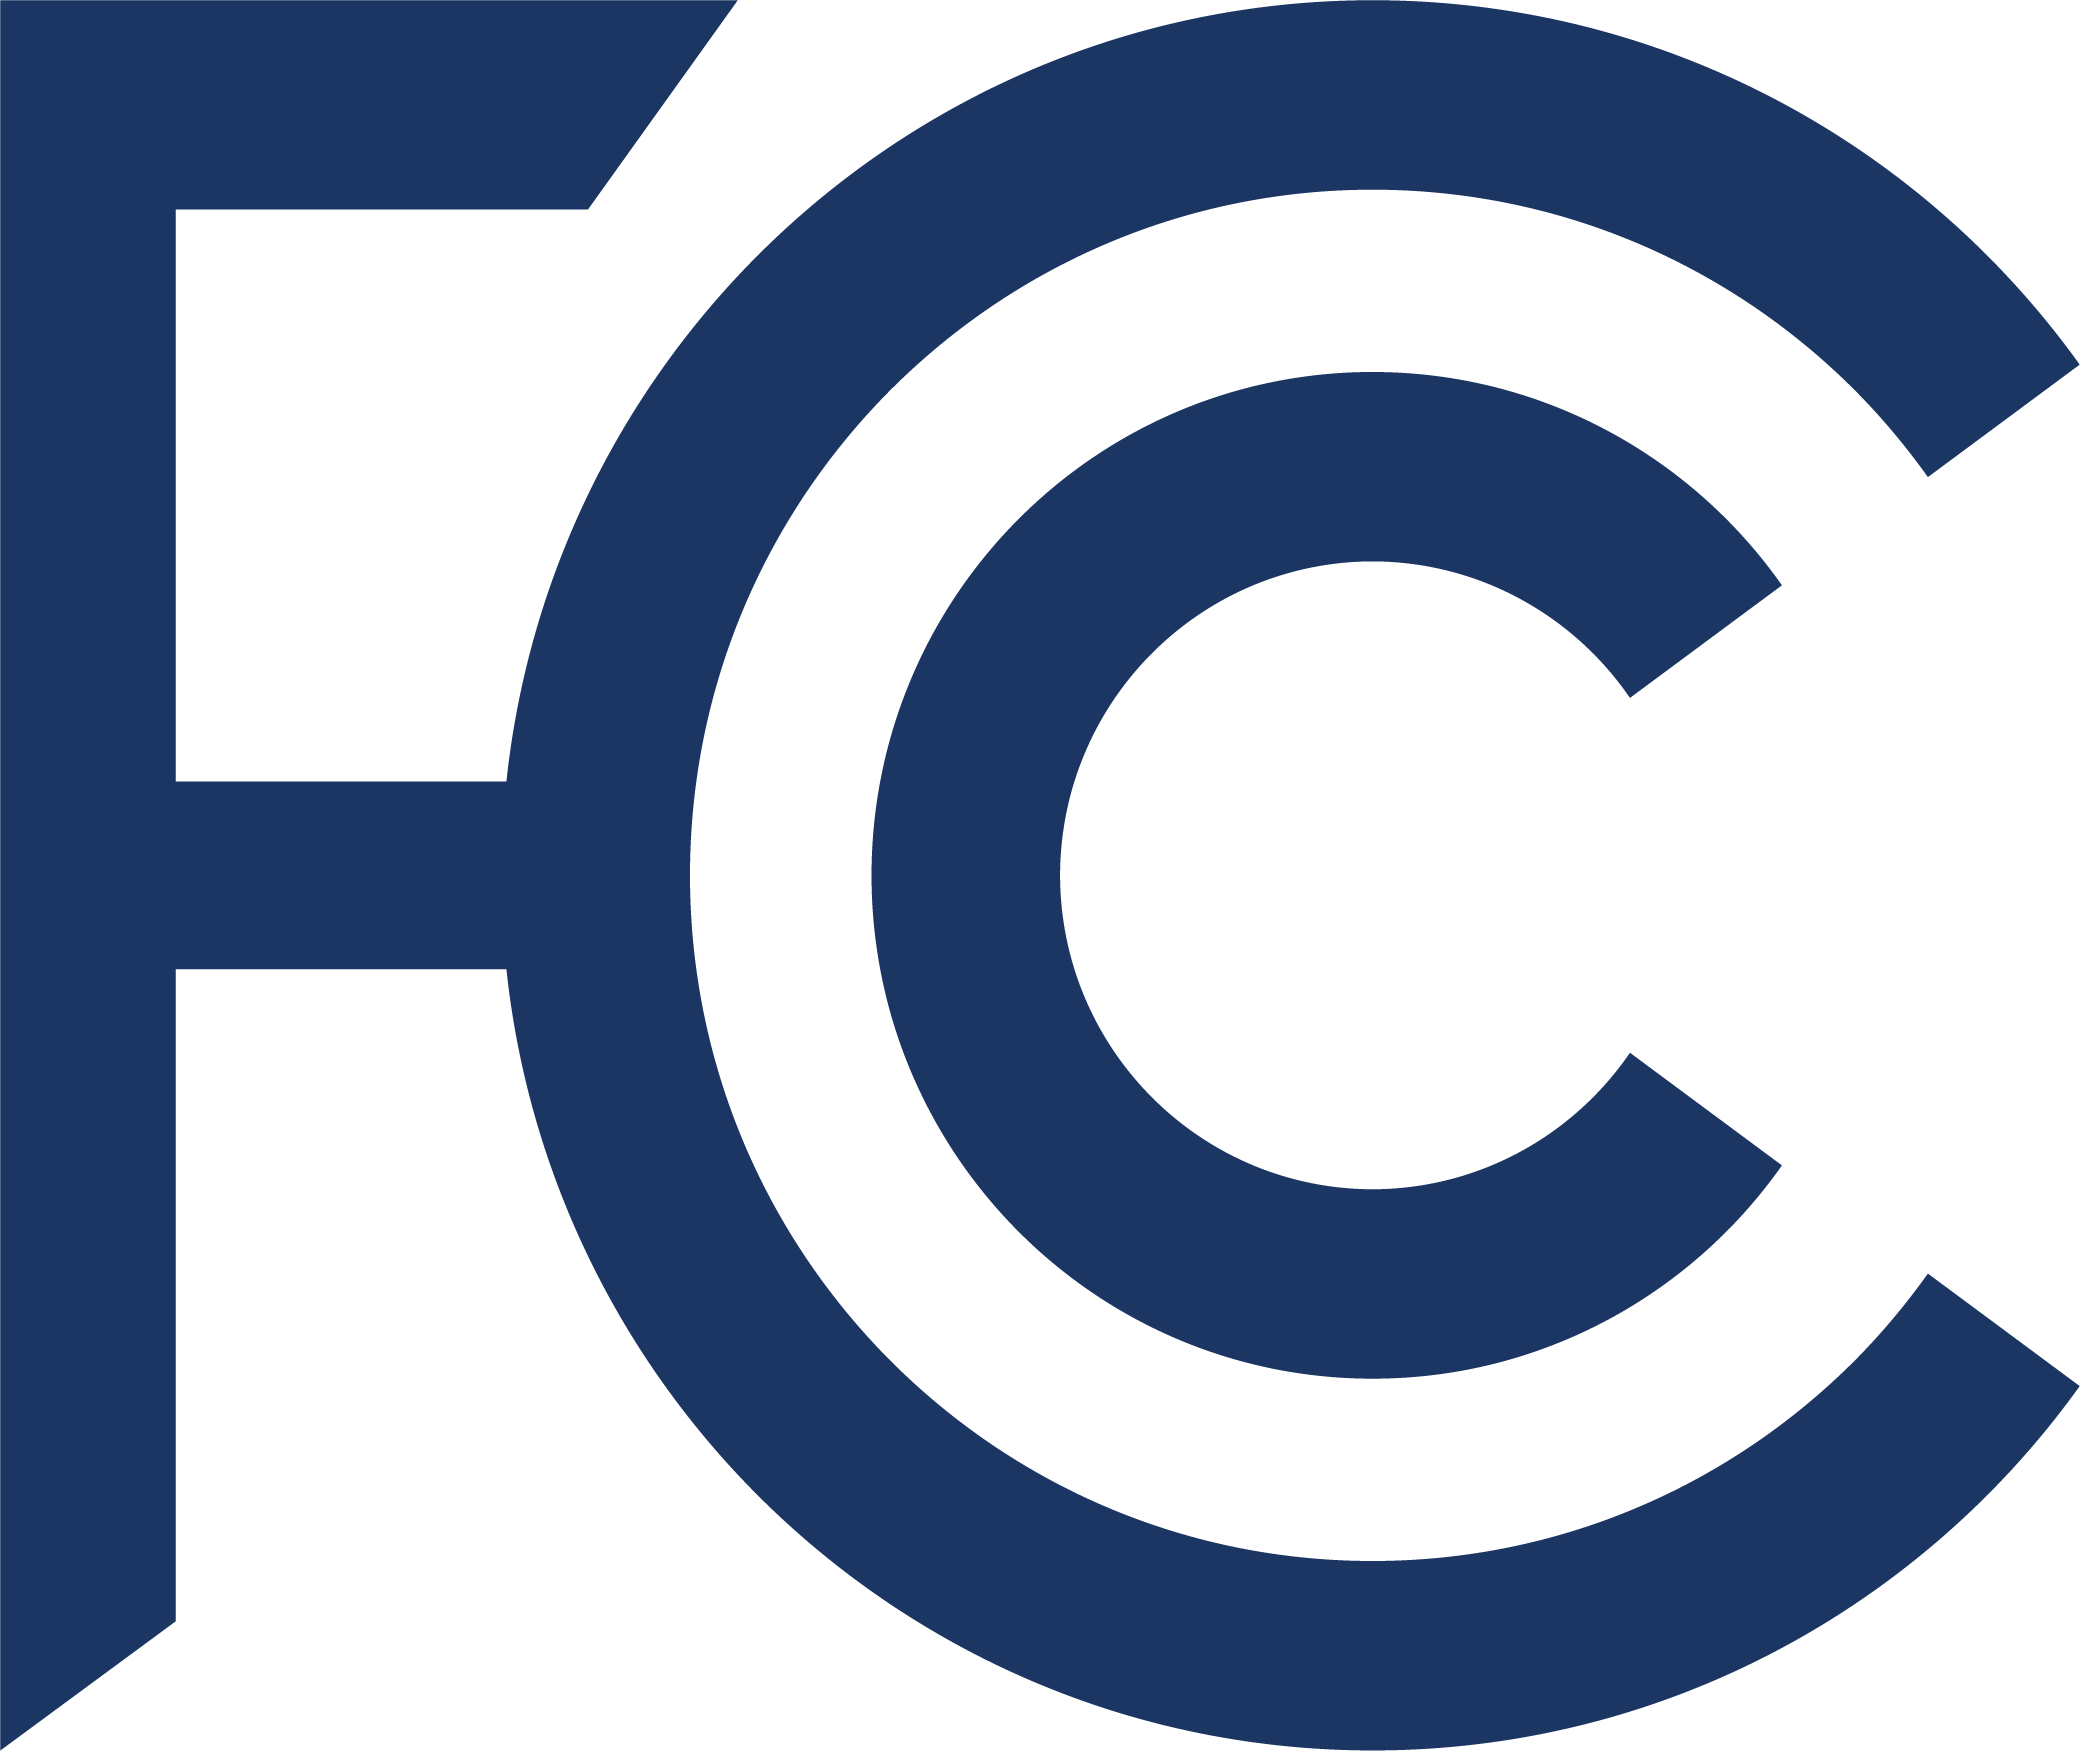 fcc-logo-blue-2020-large